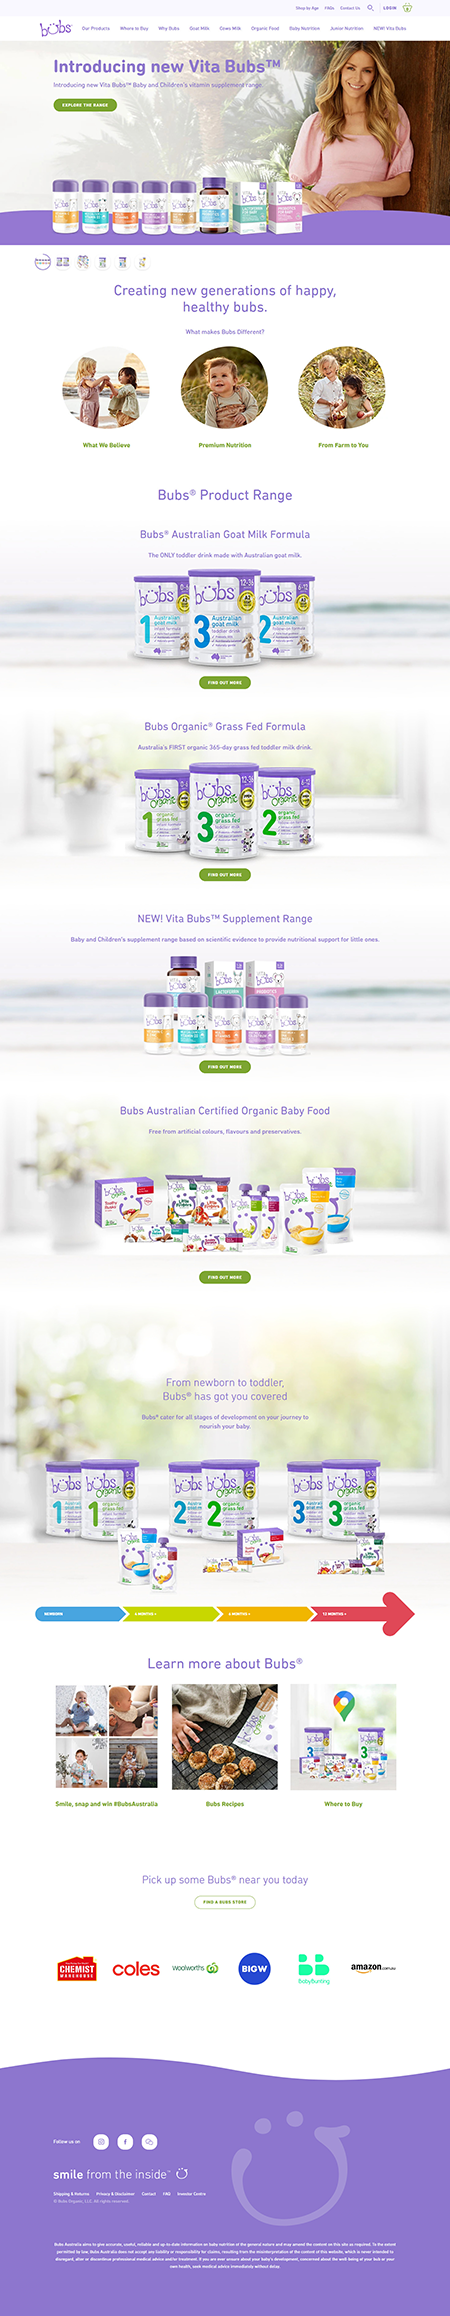 Bubs Australia - Web Design Case Study